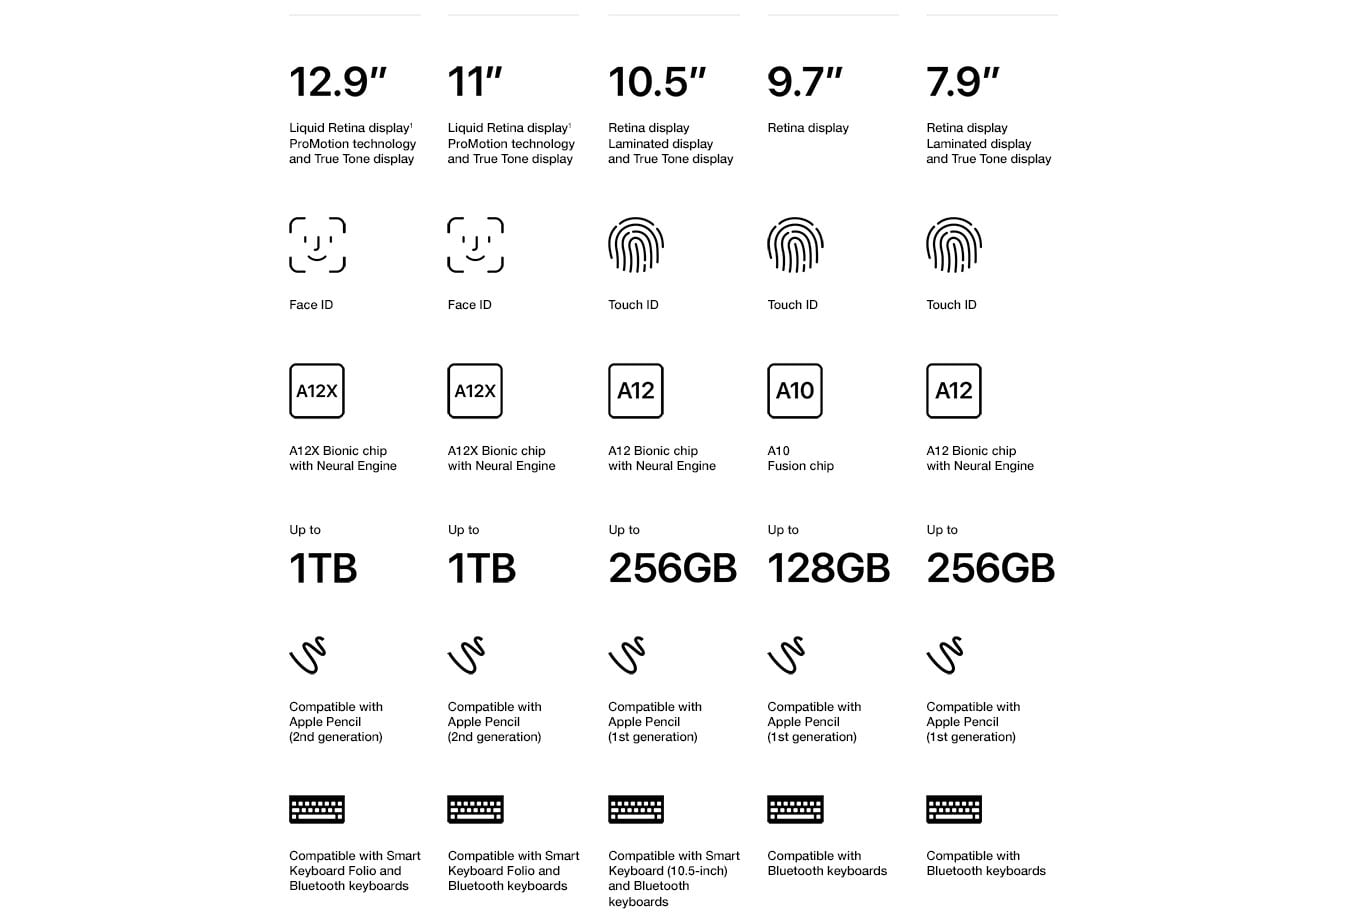 Apple Ipad Comparison Chart